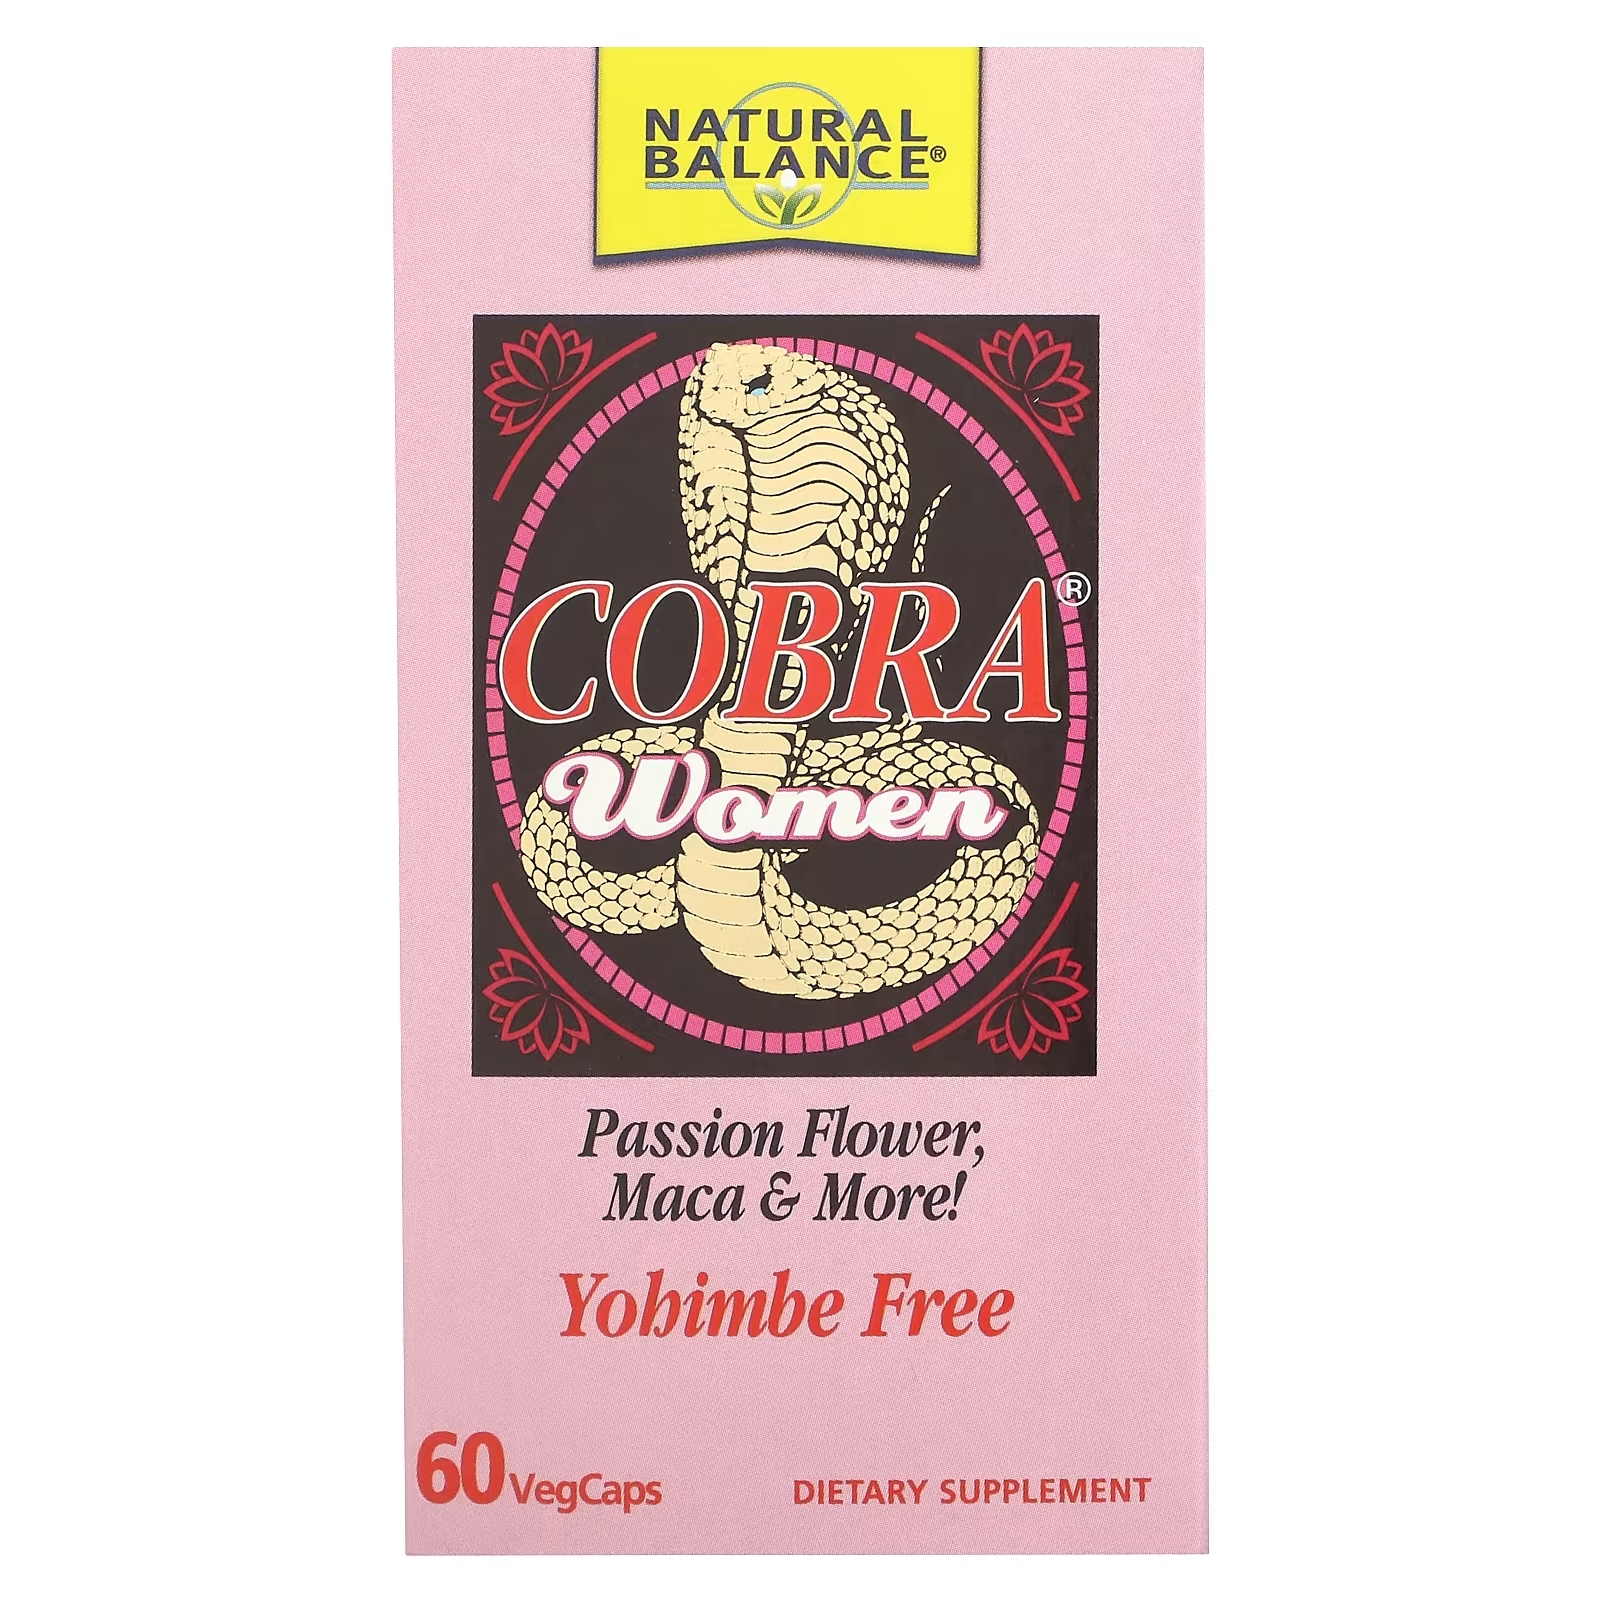 Пищевая Добавка Natural Balance Cobra Women, 60 капсул natural balance cobra women 60 капсул на растительной основе